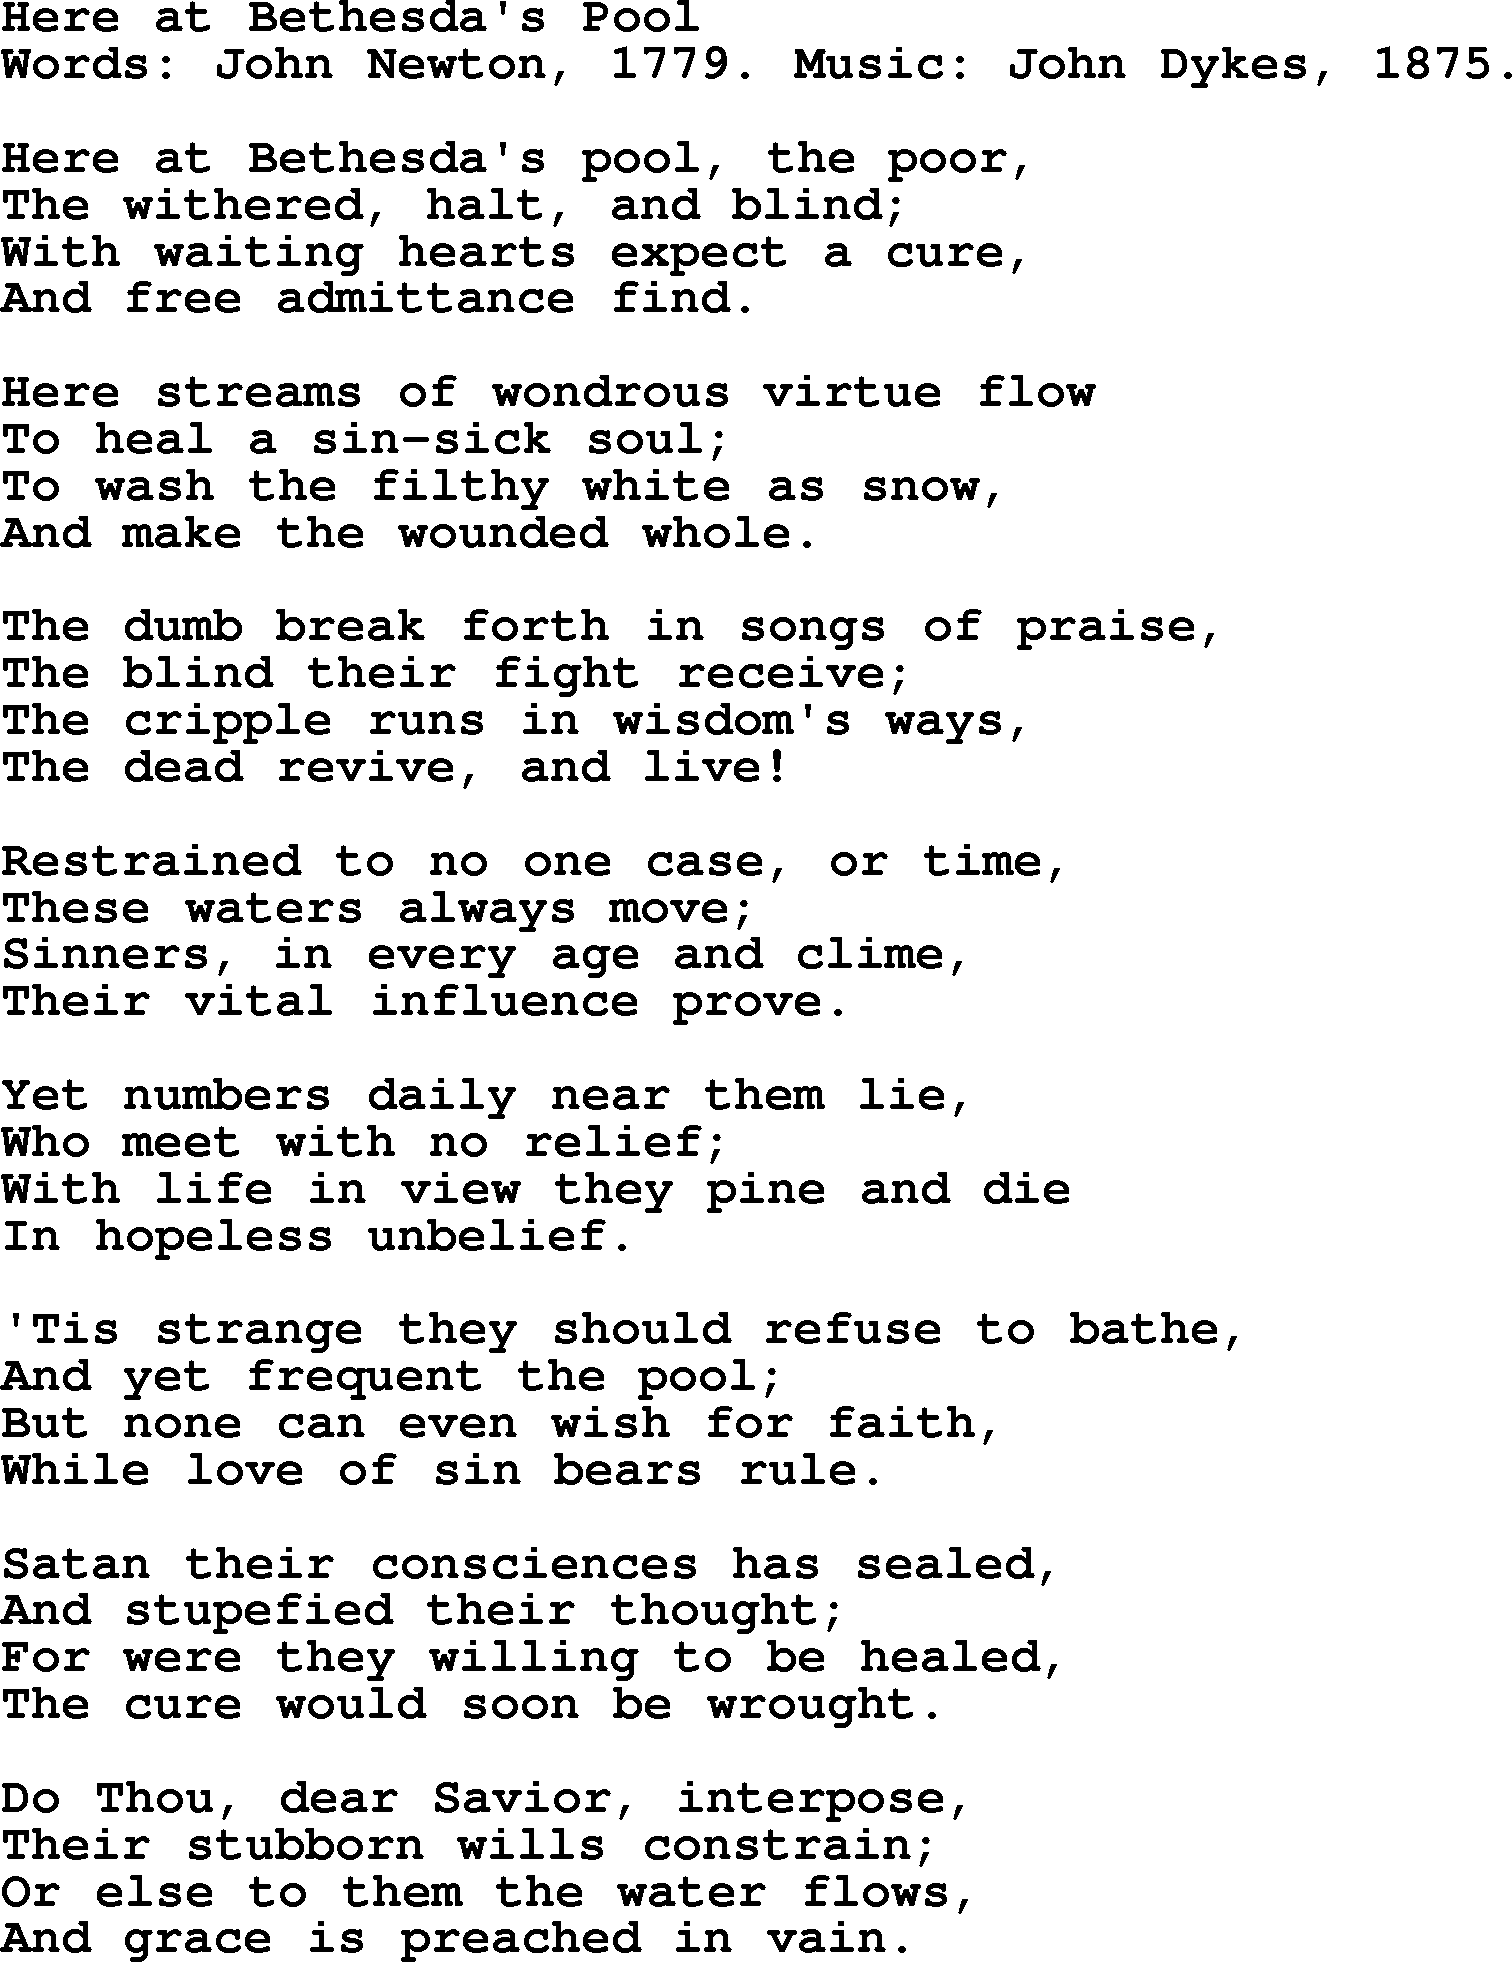 John Newton hymn: Here At Bethesda's Pool, lyrics